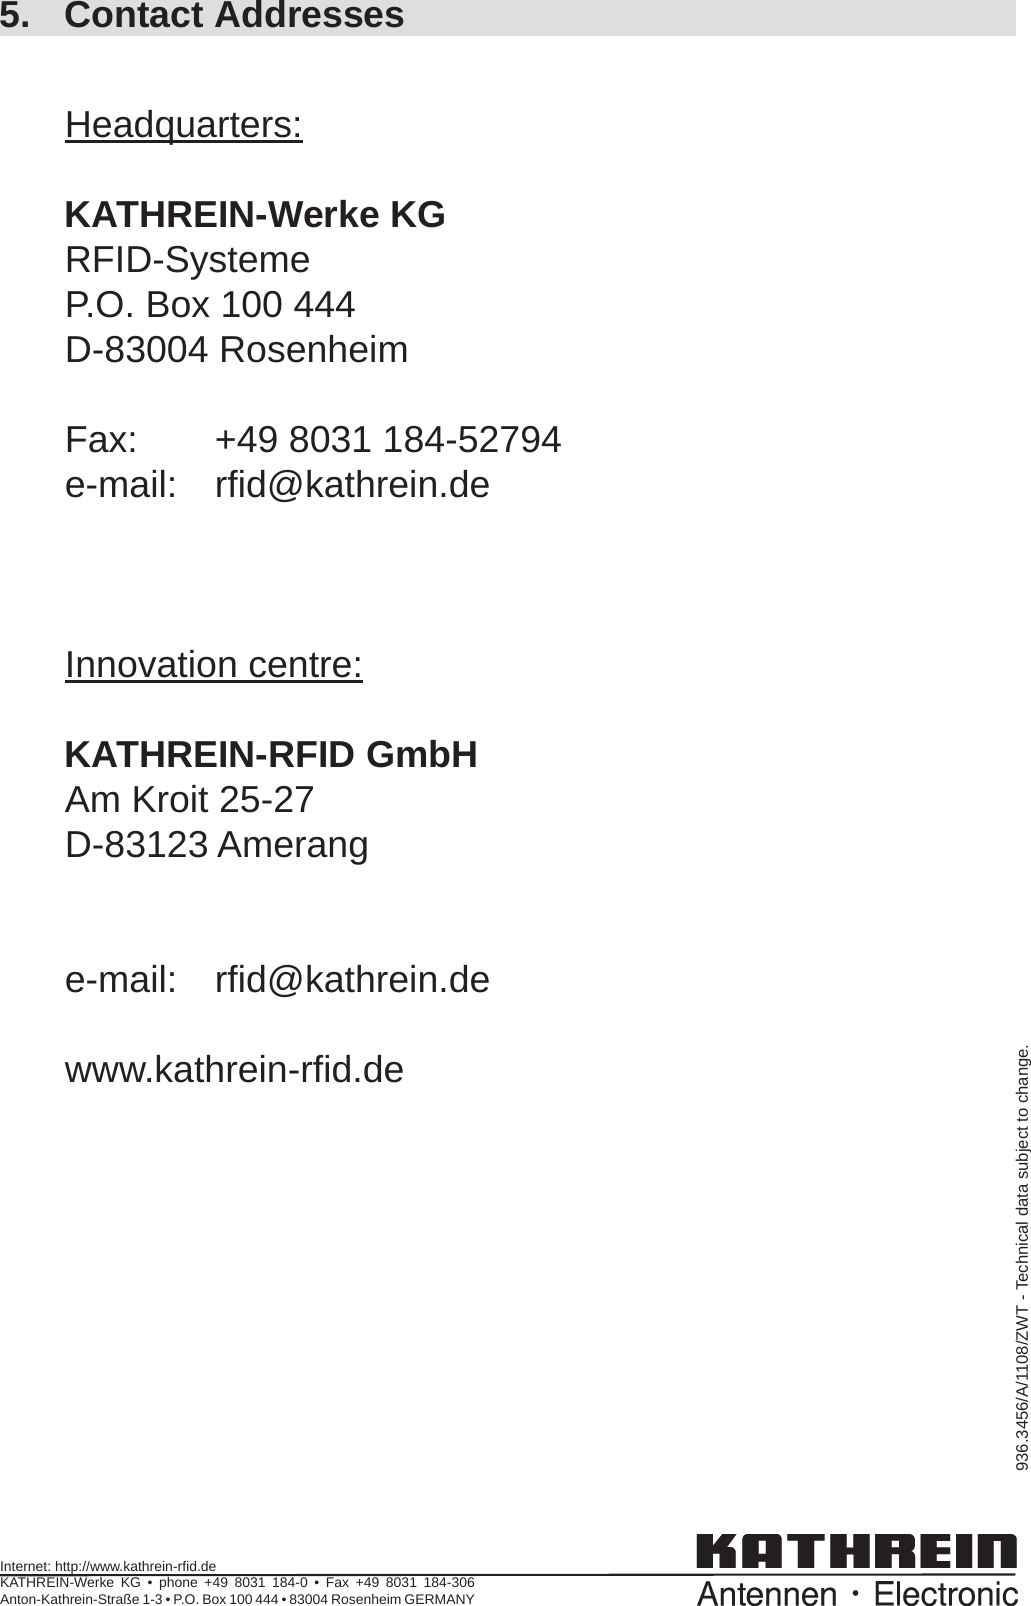 5. Contact AddressesHeadquarters:KATHREIN-Werke KGRFID-SystemeP.O. Box 100 444D-83004 RosenheimFax:   +49 8031 184-52794e-mail: rﬁ d@kathrein.deInnovation centre:KATHREIN-RFID GmbHAm Kroit 25-27D-83123 Amerange-mail: rﬁ d@kathrein.dewww.kathrein-rﬁ d.de936.3456/A/1108/ZWT - Technical data subject to change.Internet: http://www.kathrein-rﬁ d.deKATHREIN-Werke KG • phone +49 8031 184-0 • Fax +49 8031 184-306 Anton-Kathrein-Straße 1-3 • P.O. Box 100 444 • 83004 Rosenheim GERMANY 